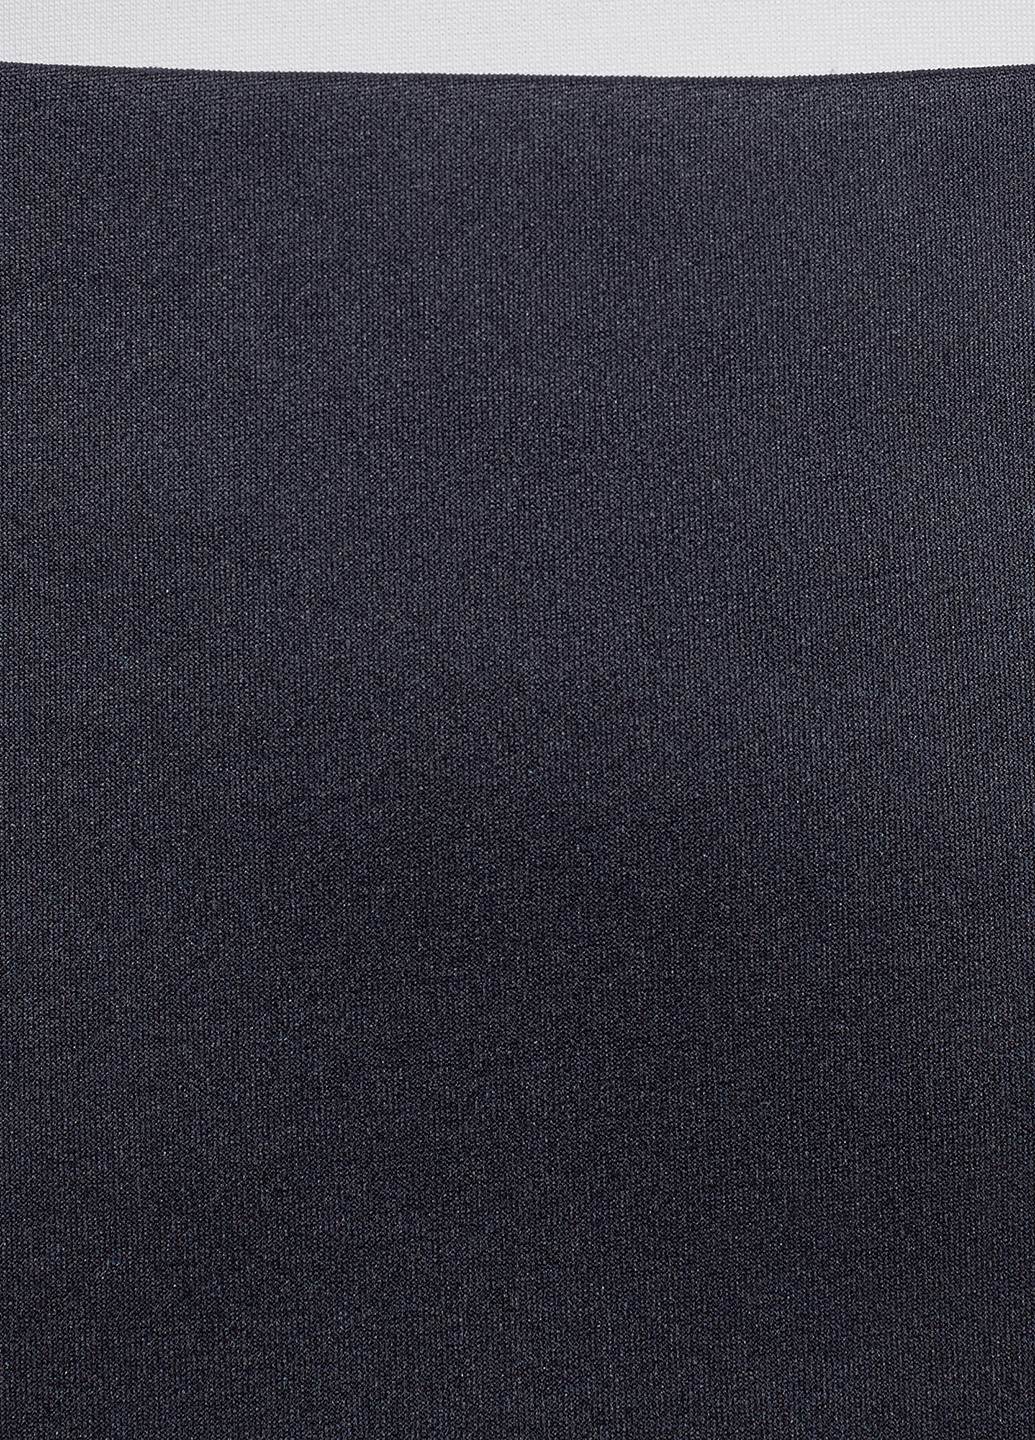 Темно-синяя офисная однотонная юбка Oodji